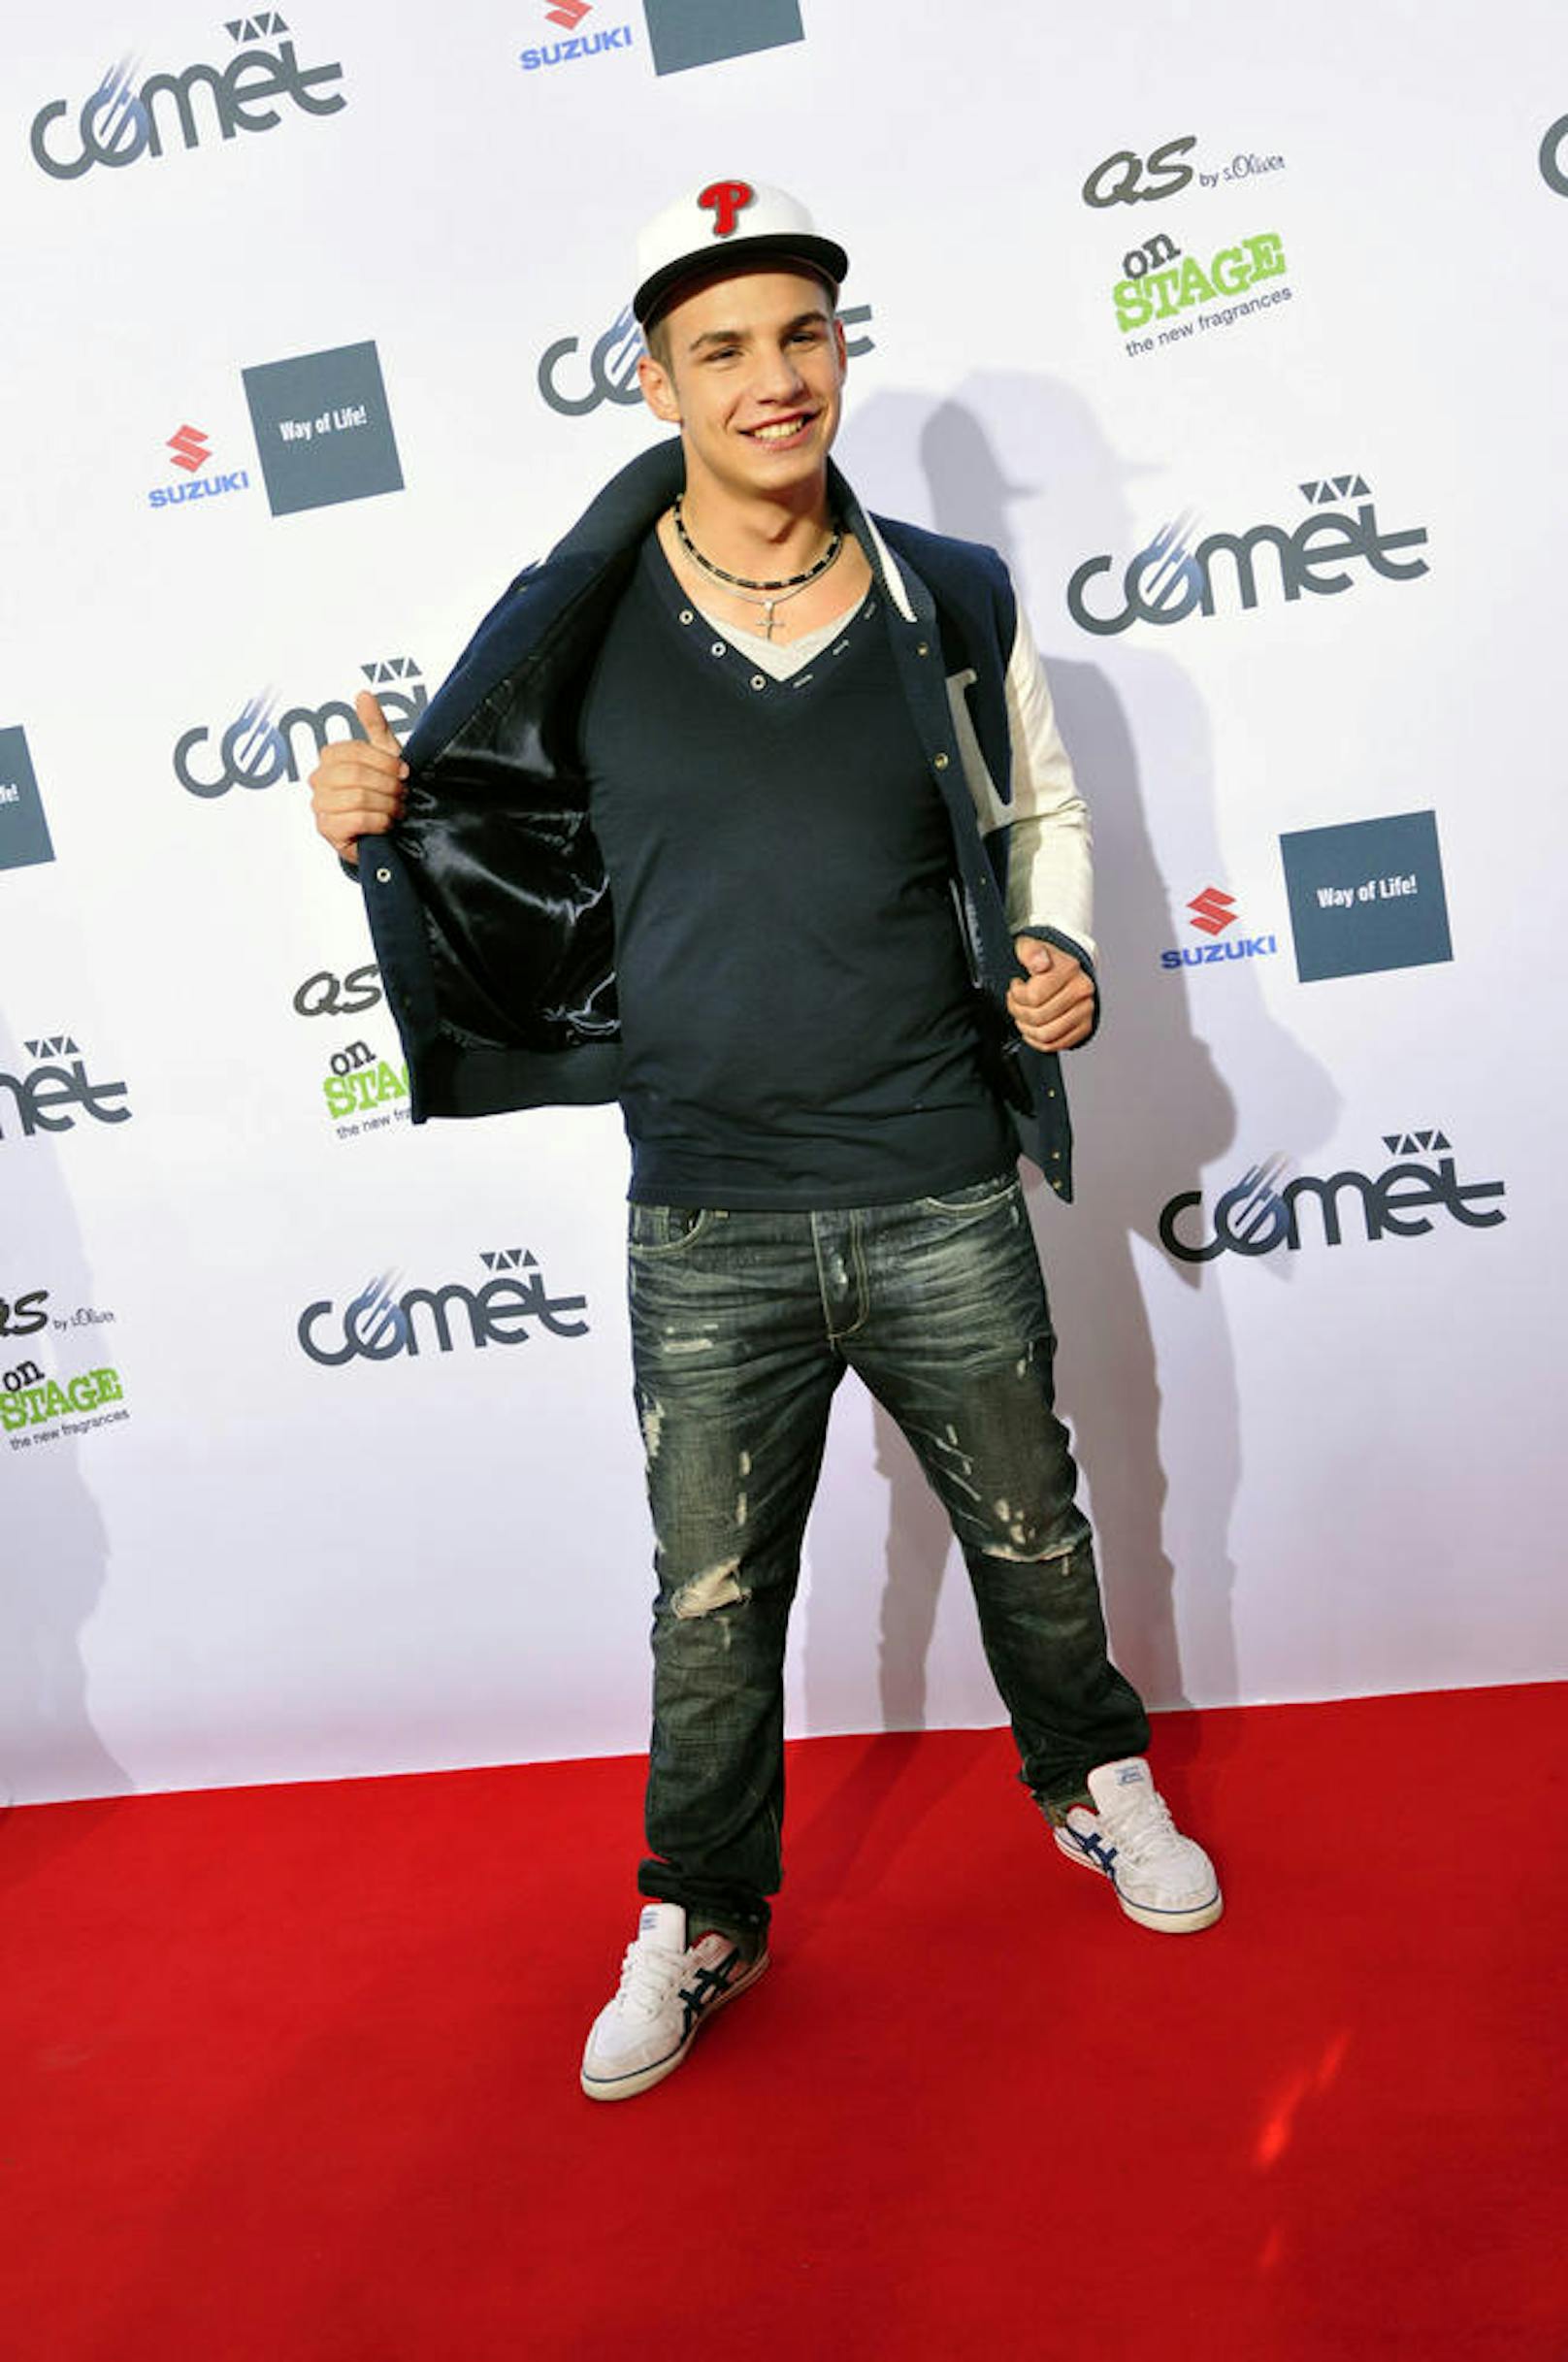 Pietro Lombardi bei der Verleihung des deutschen Musikpreises Comet 2011 in der König-Pilsener-Arena, Oberhausen